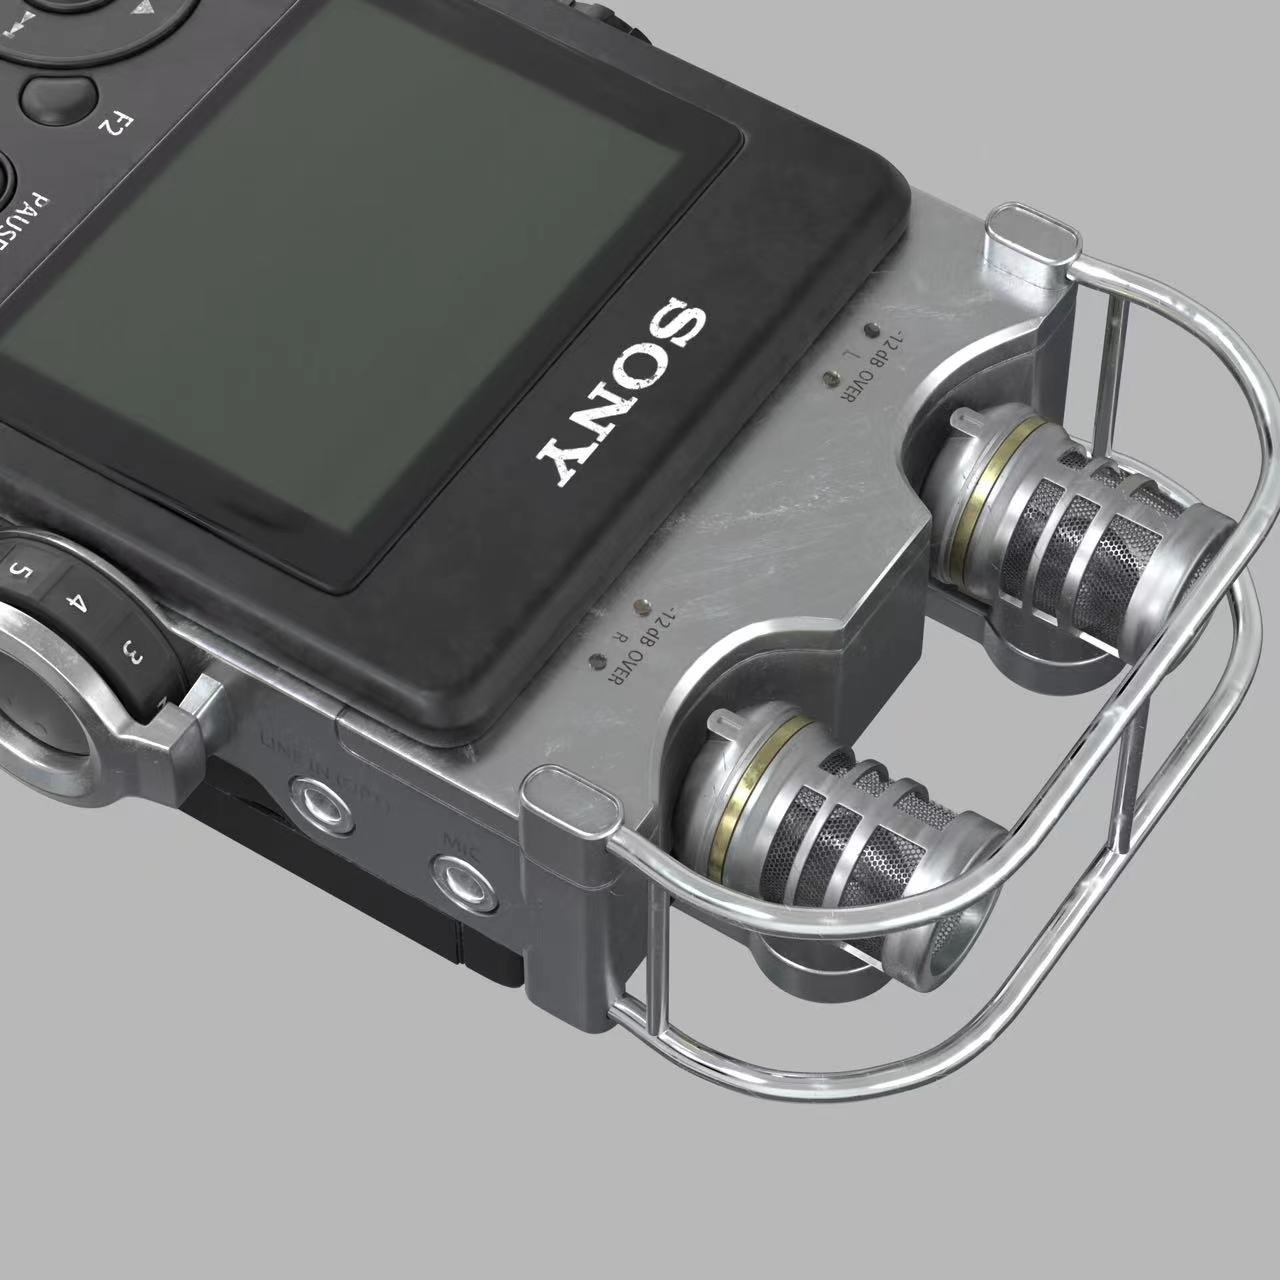 Sony pcm-100